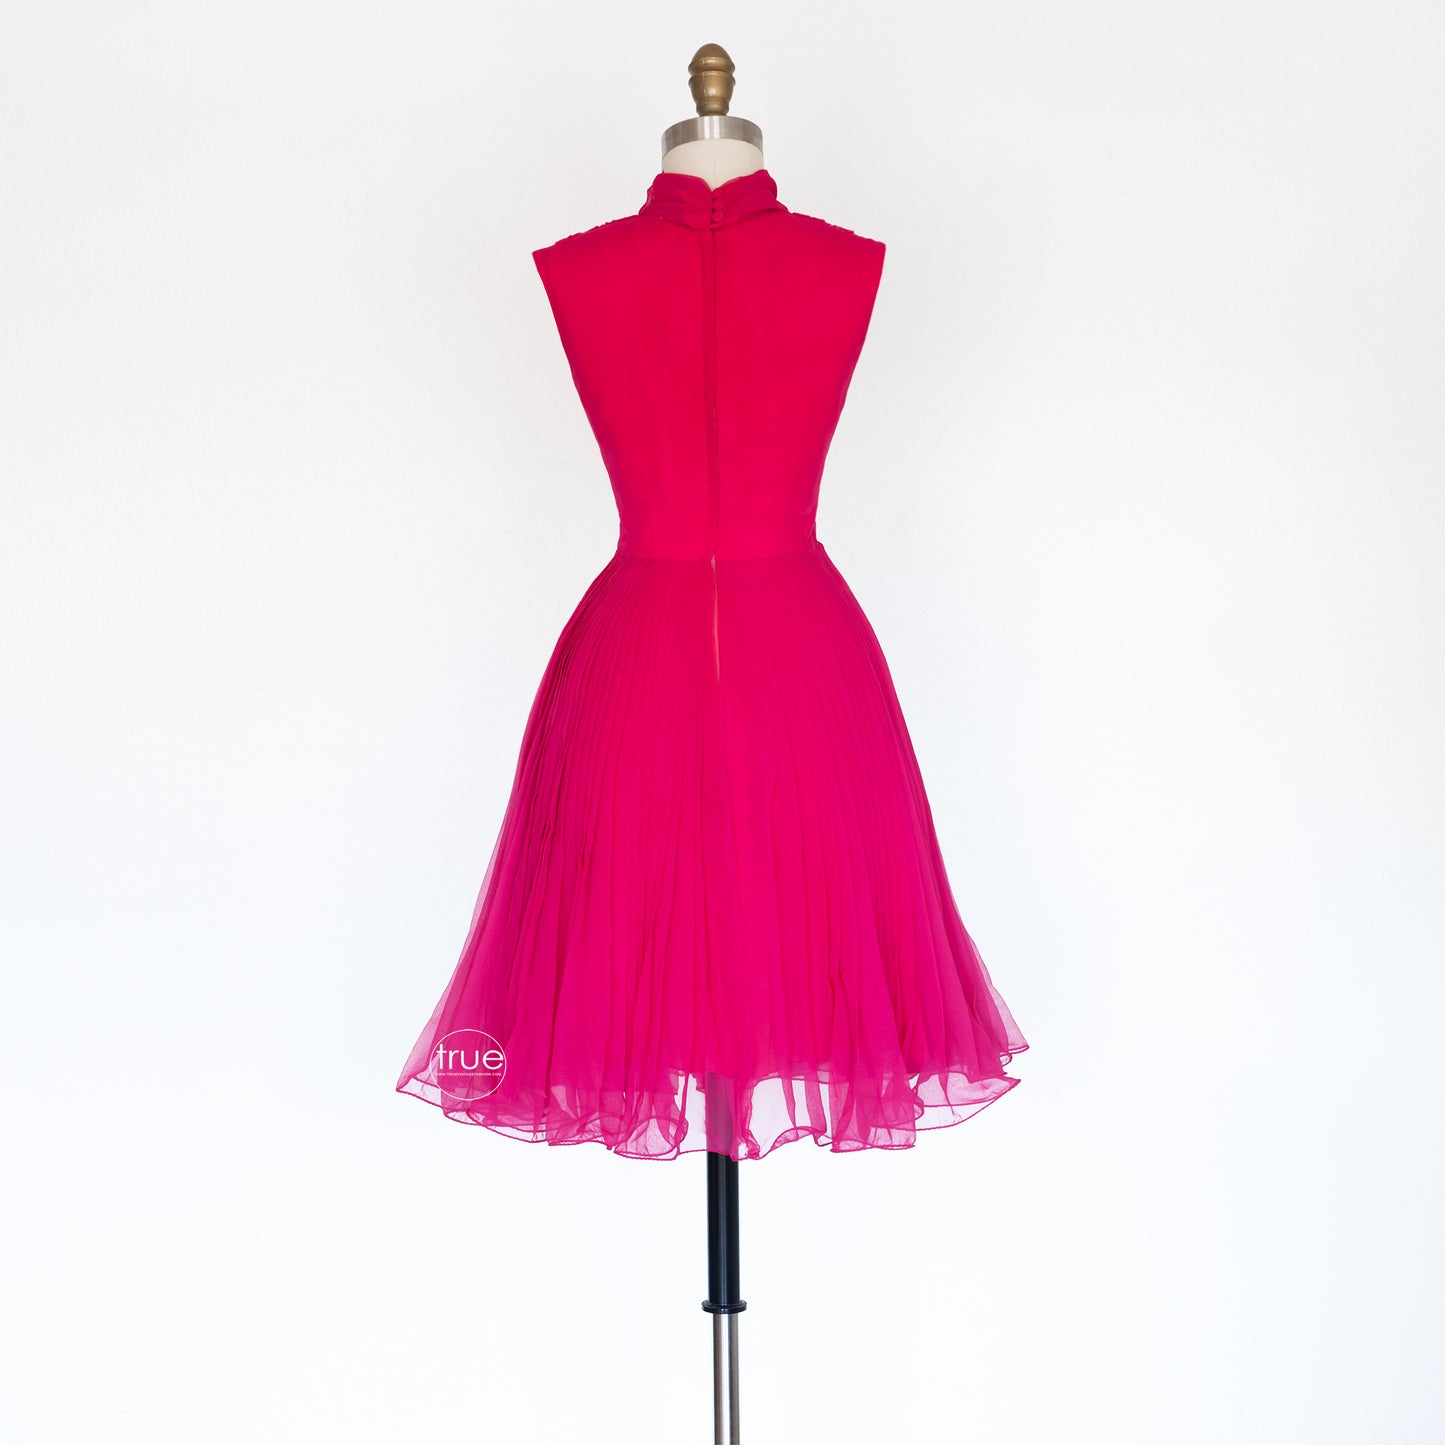 vintage 1960's dress ...flirty LILLI DIAMOND california barbie pink chiffon dress